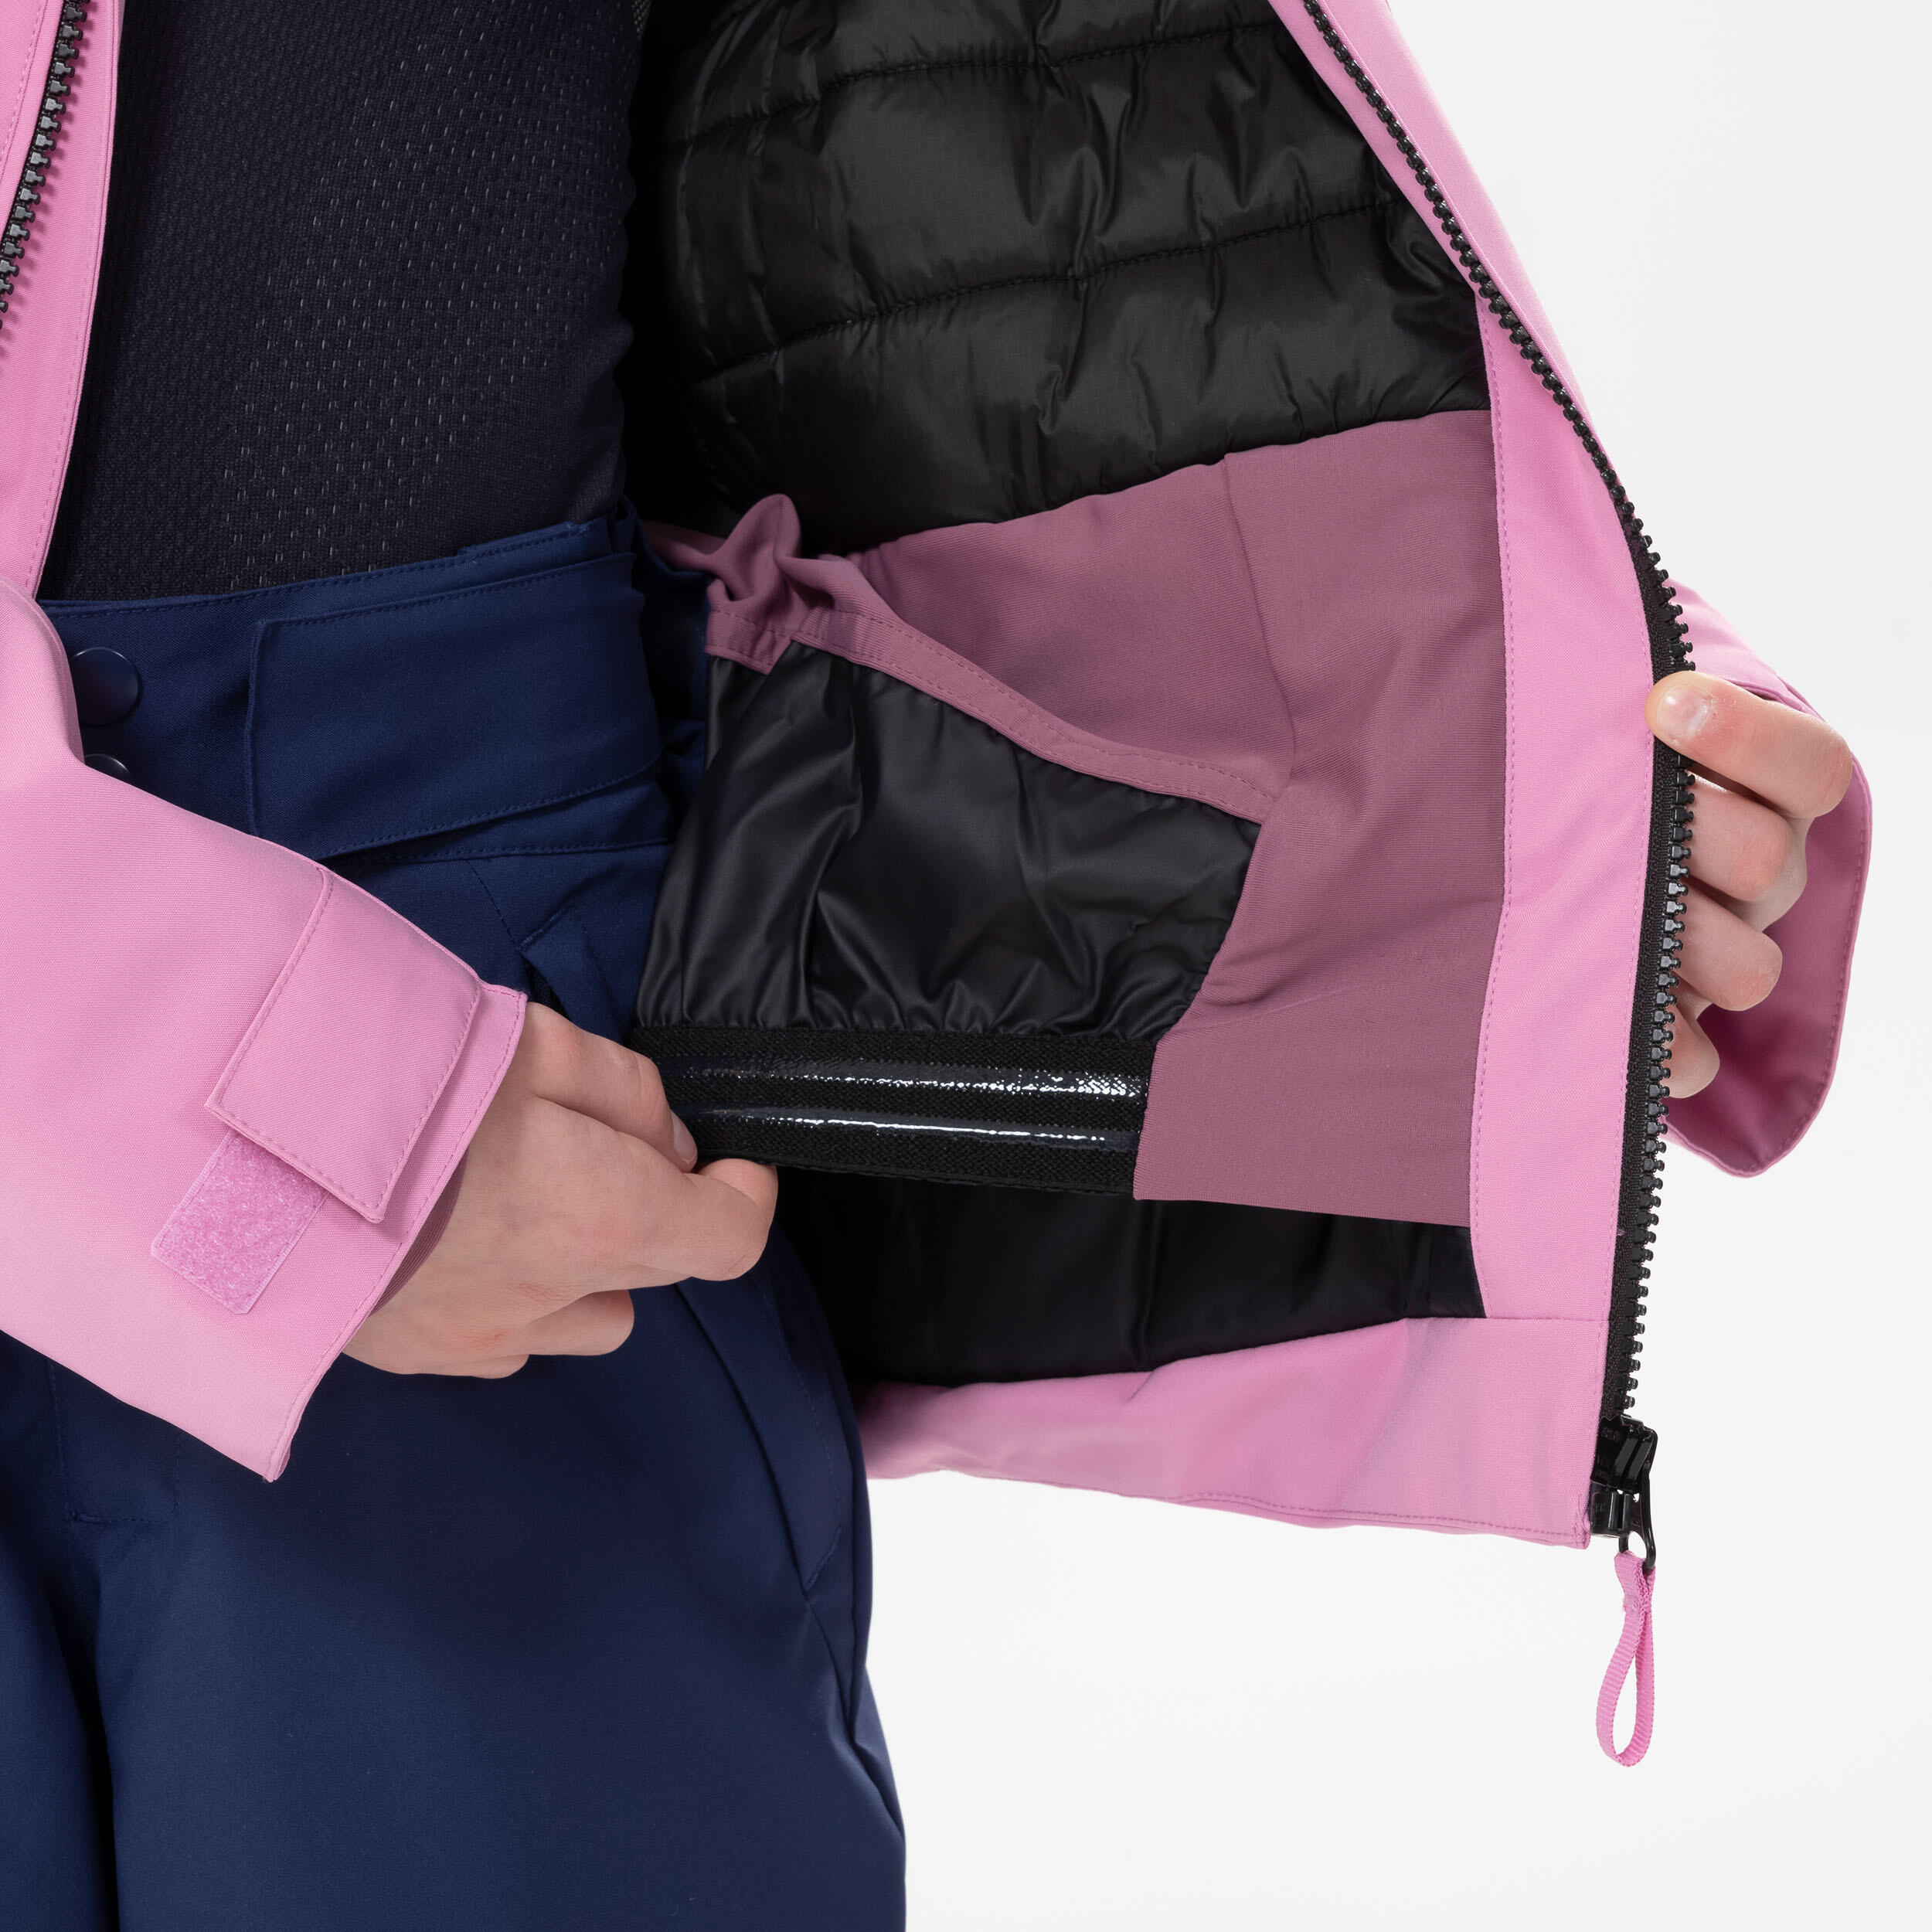 Kids’ Waterproof Winter Jacket - Ski 550 Pink - WEDZE